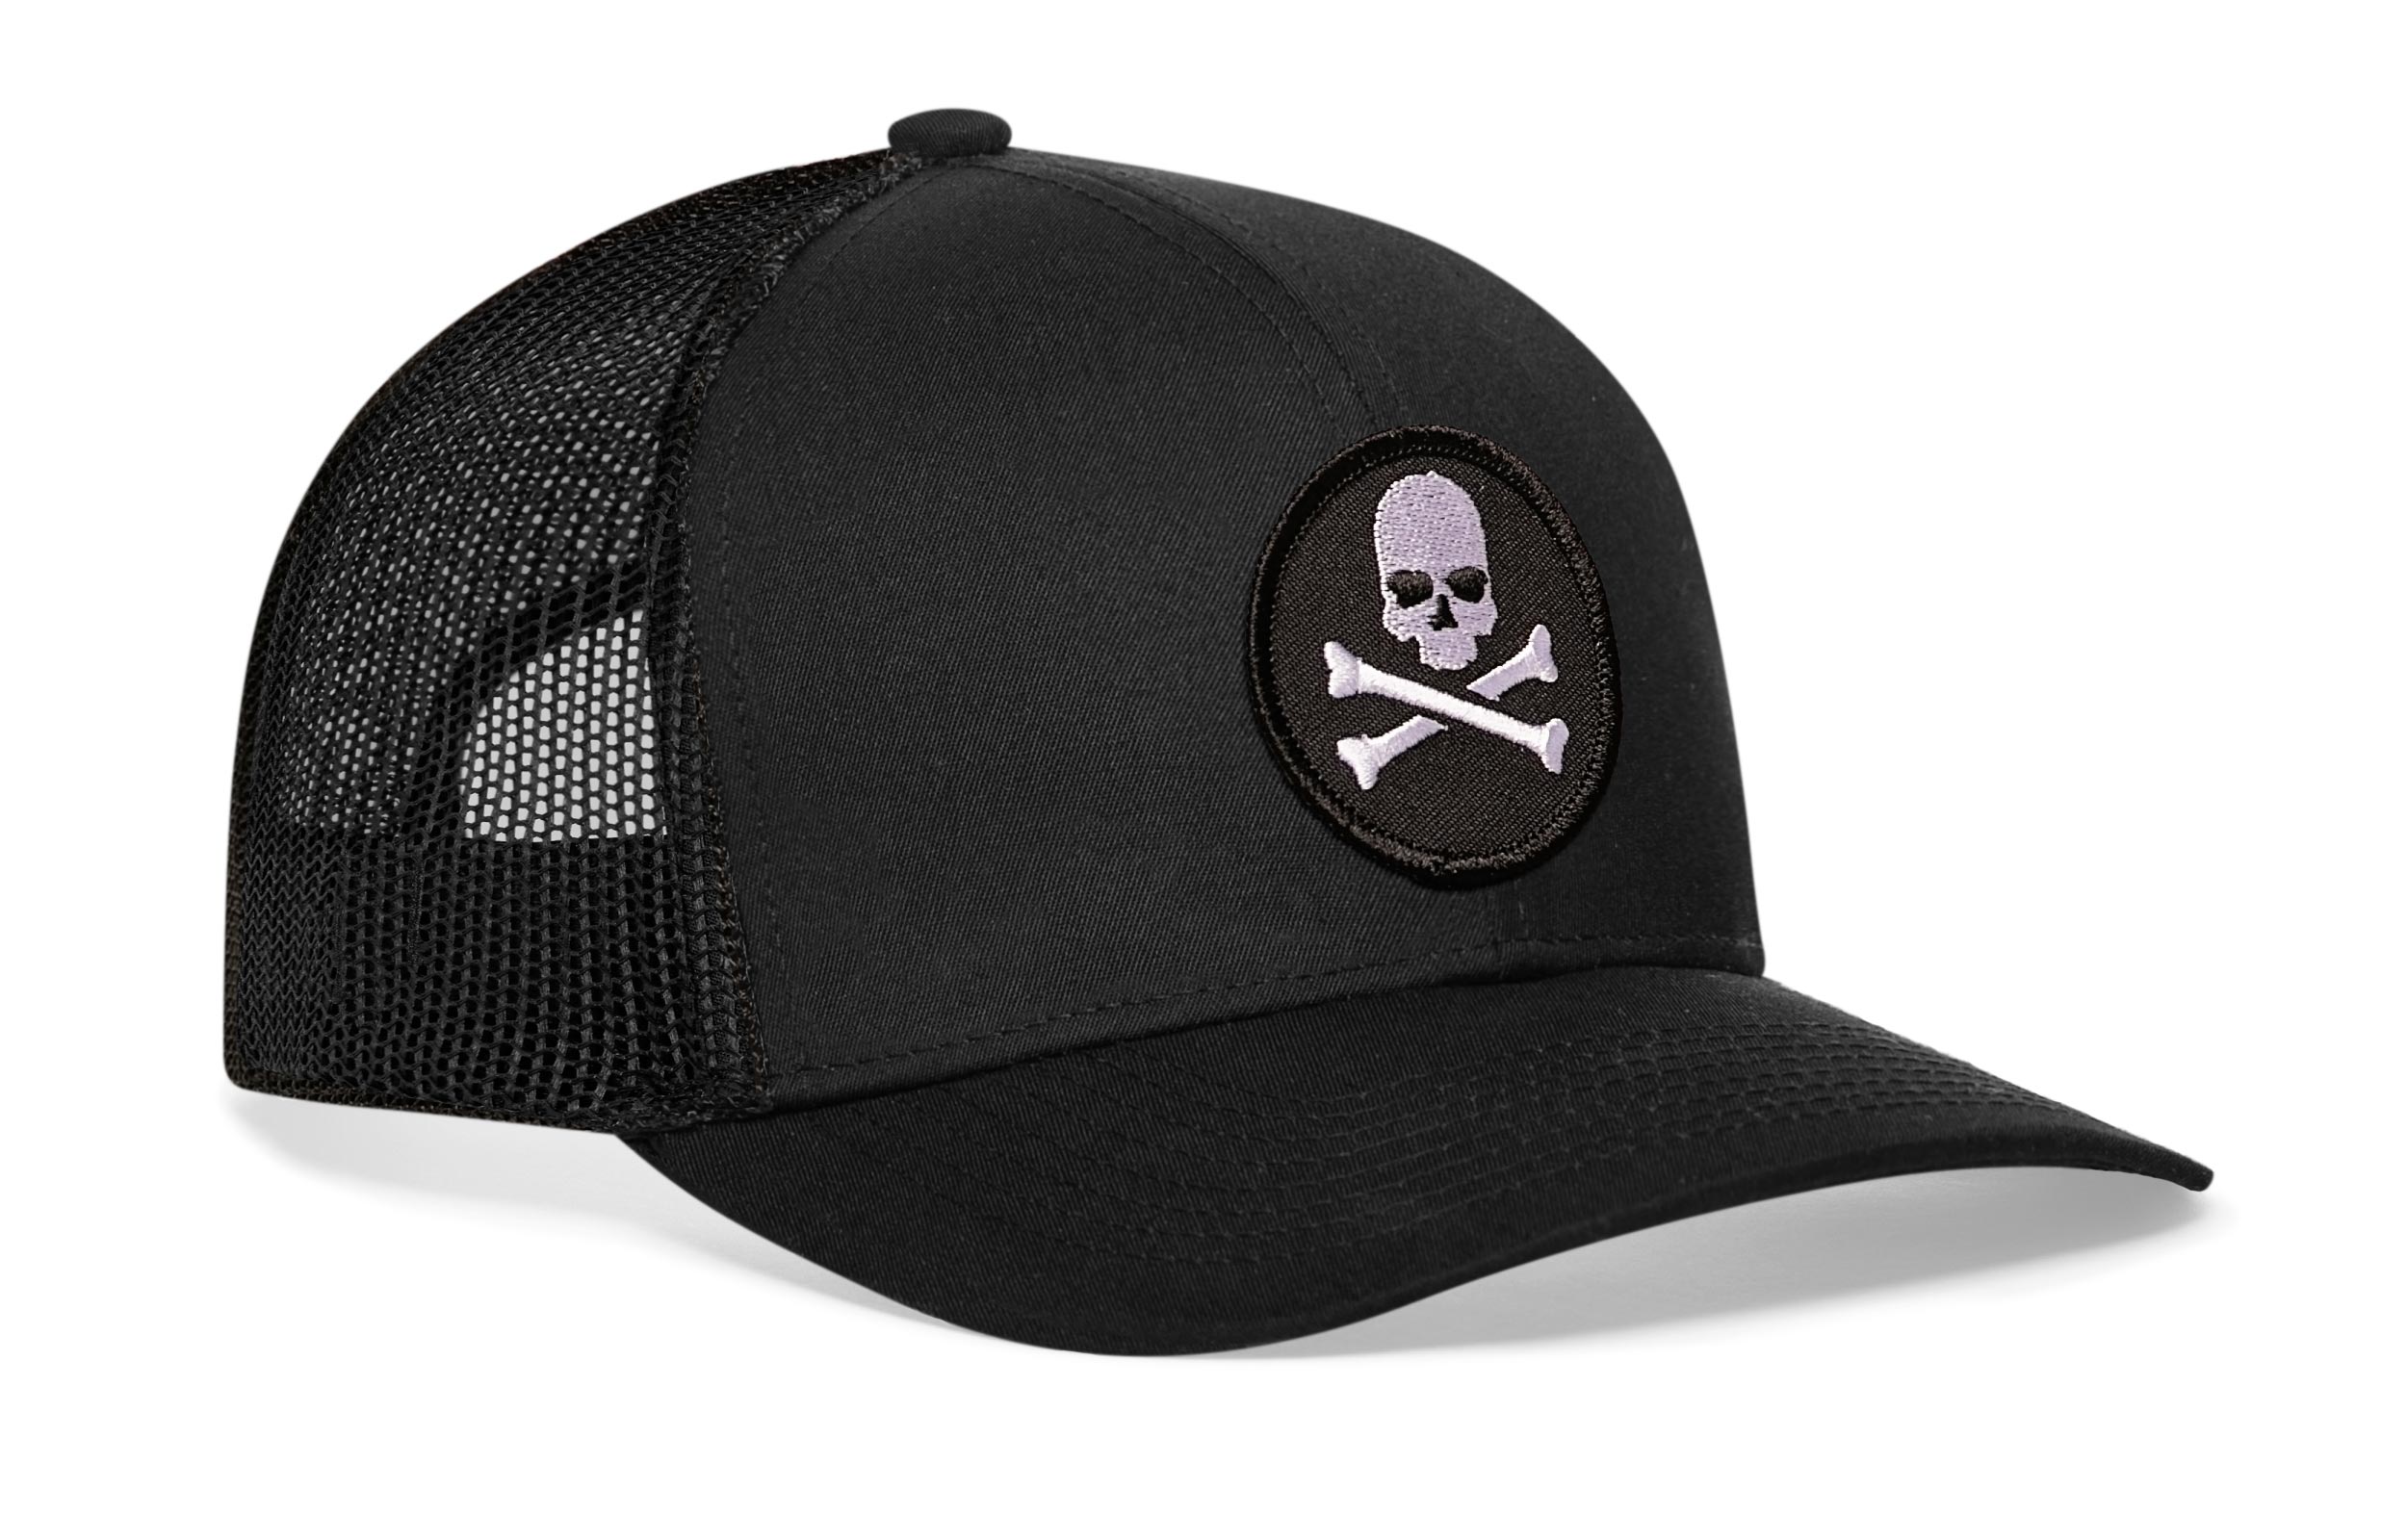 Black Trucker Hats with Cool Designs | HAKA HAT - Haka Hat